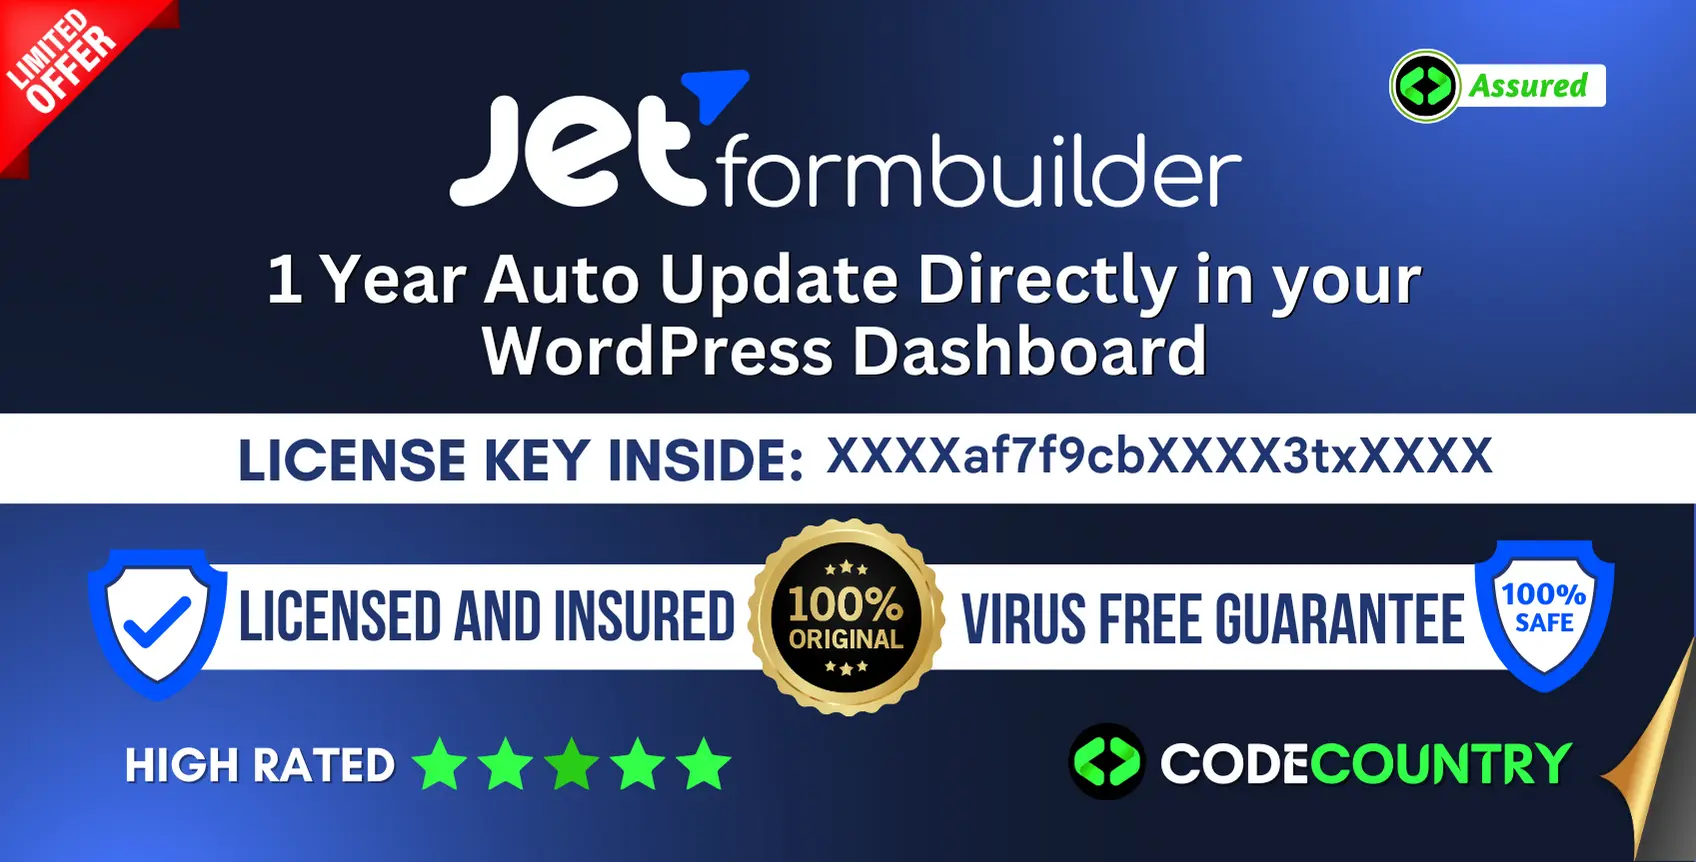 JetFormBuilder With Original License Key For 1 Year Update.